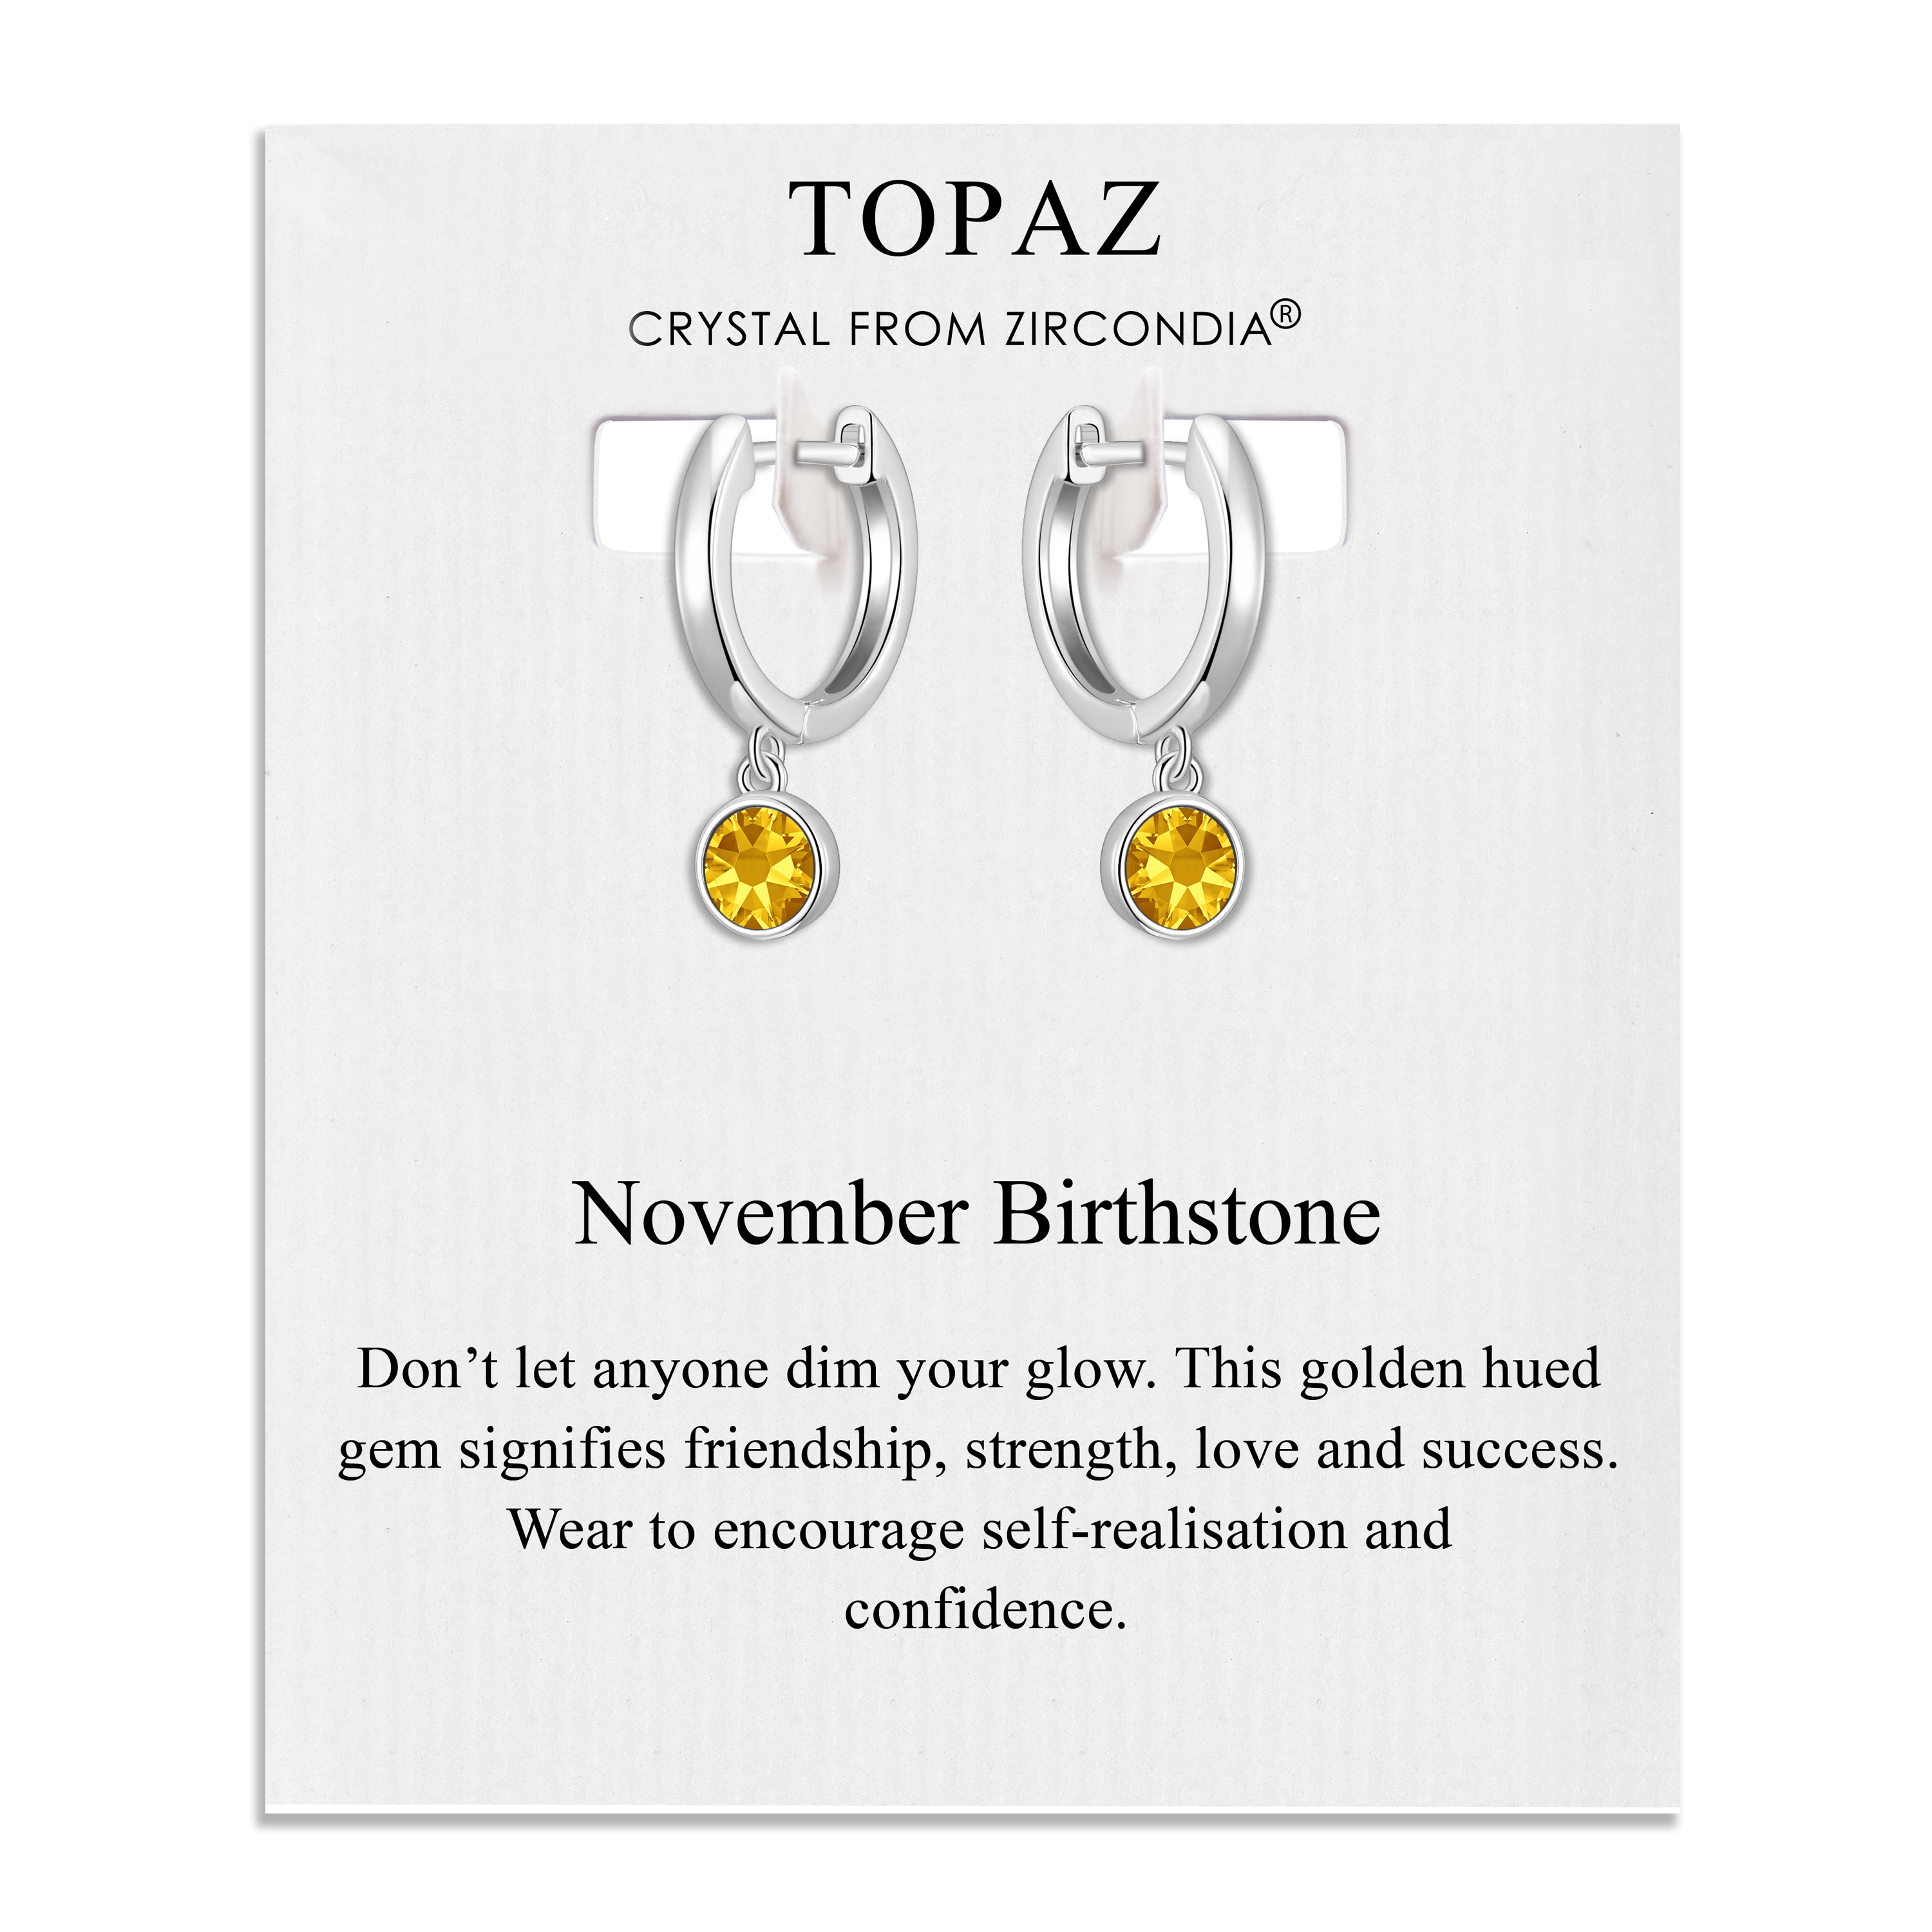 November Birthstone Hoop Earrings Created with Topaz Zircondia® Crystals by Philip Jones Jewellery